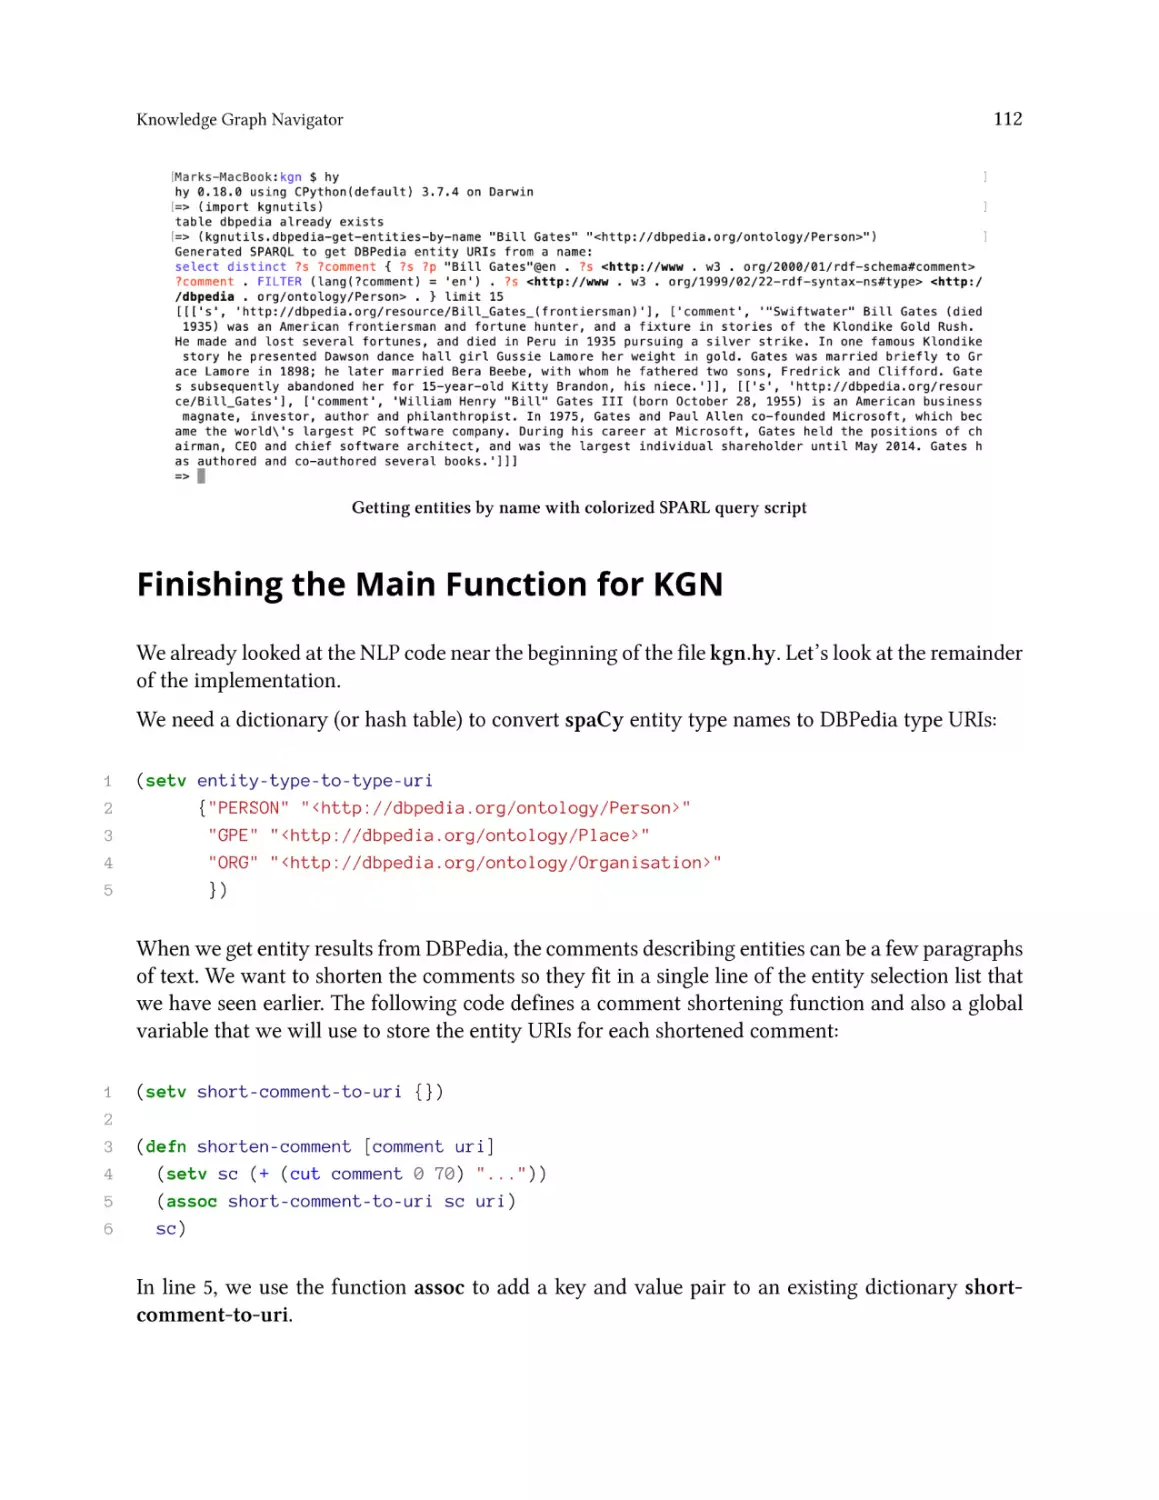 Finishing the Main Function for KGN